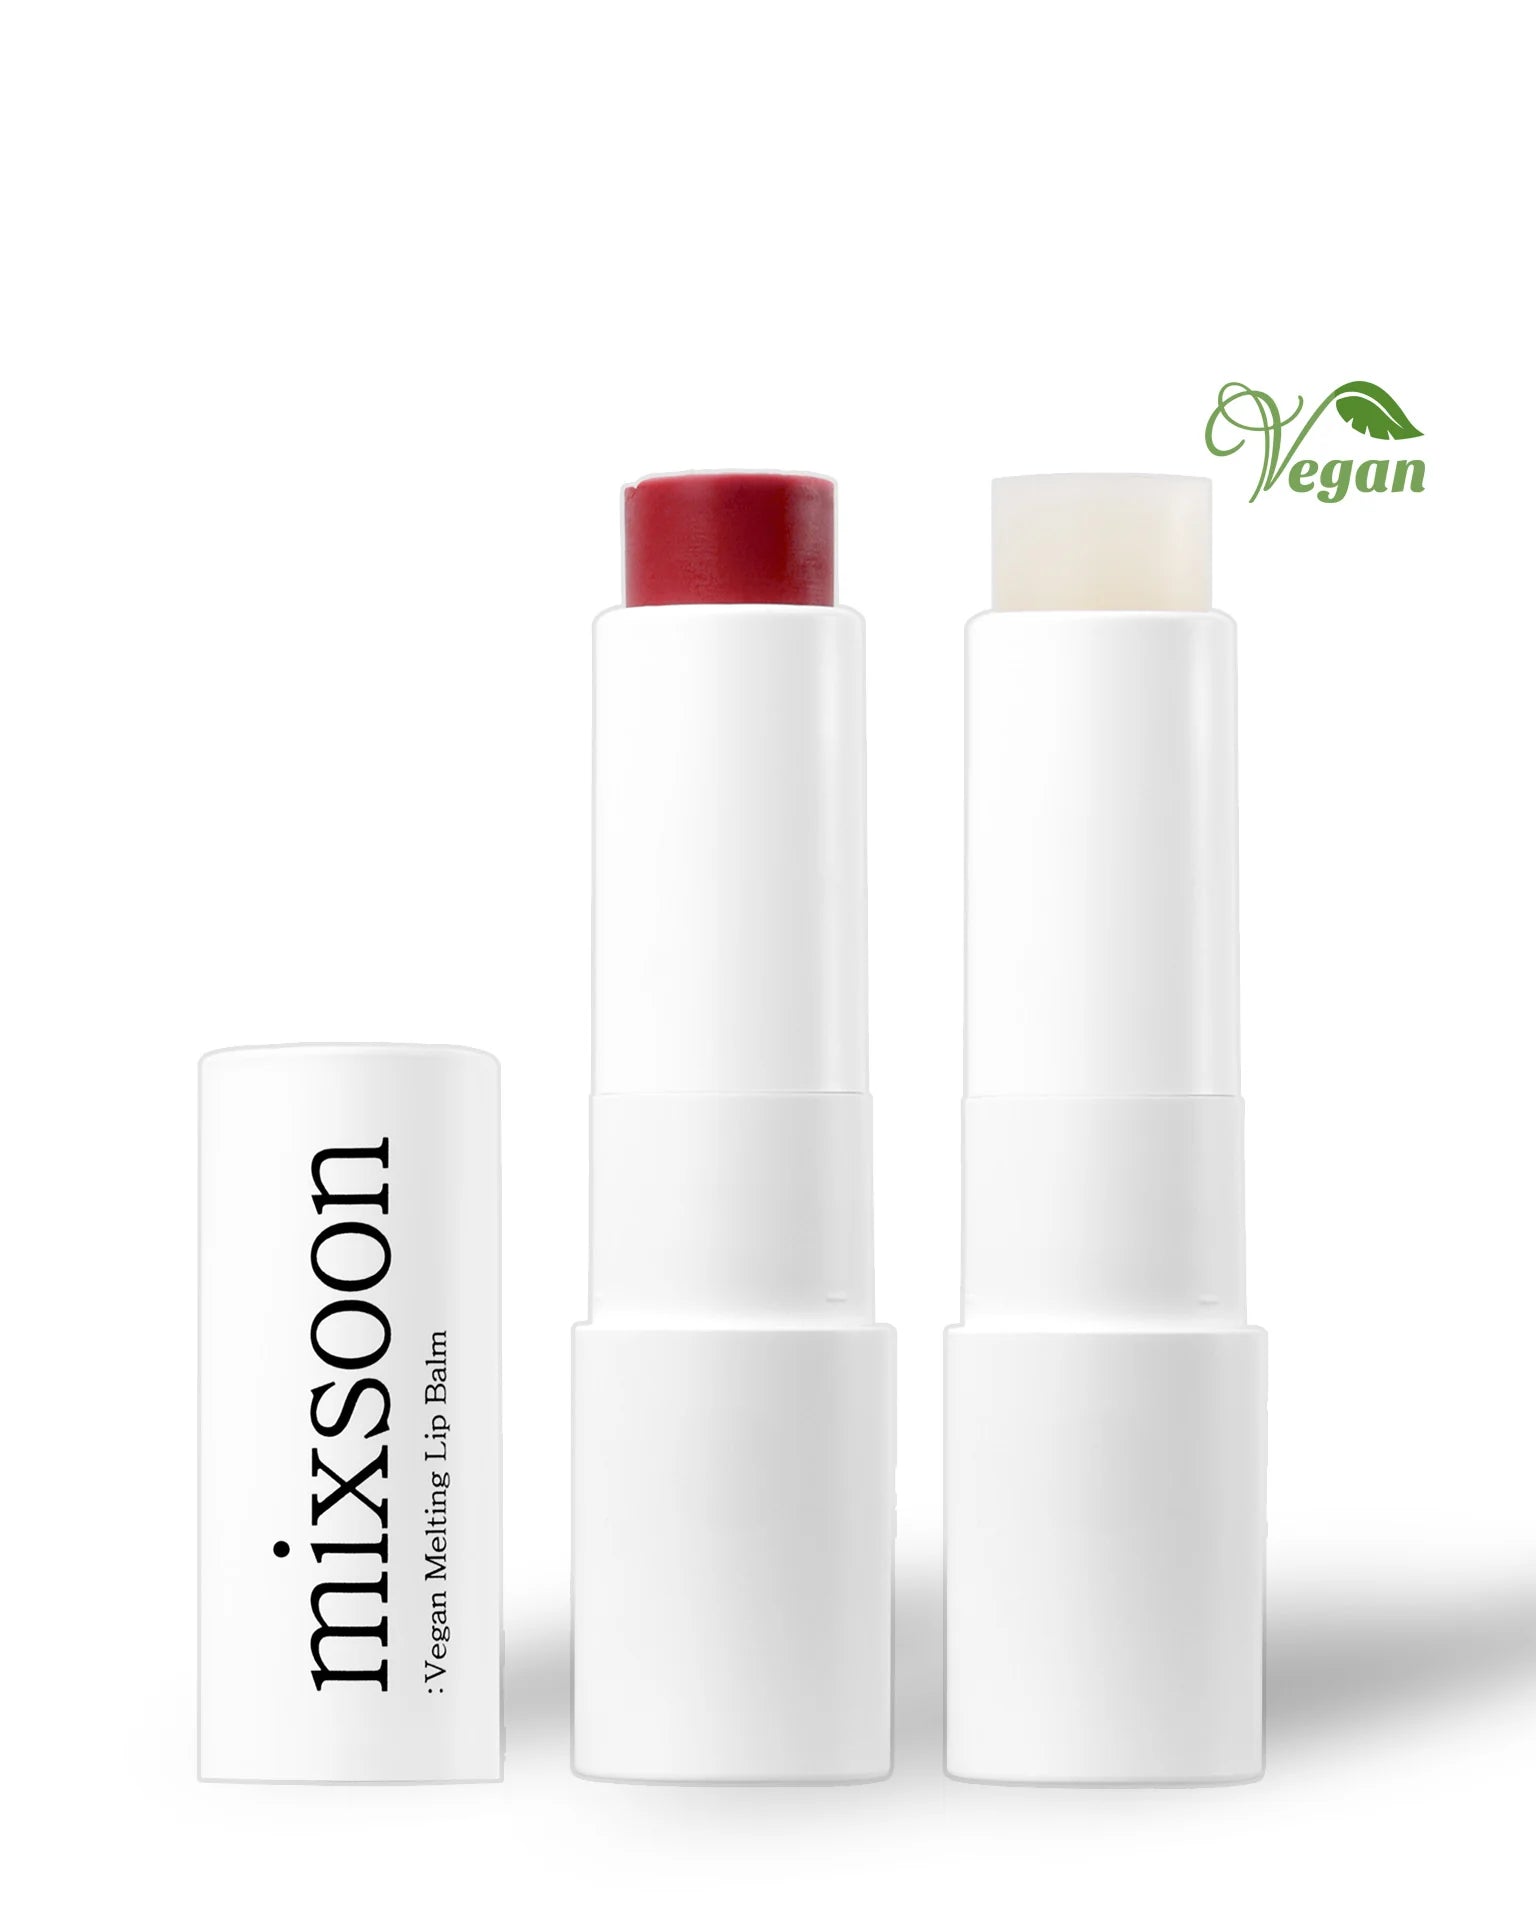 Mixsoon Vegan Moisturizing Lip Balm 4.5G